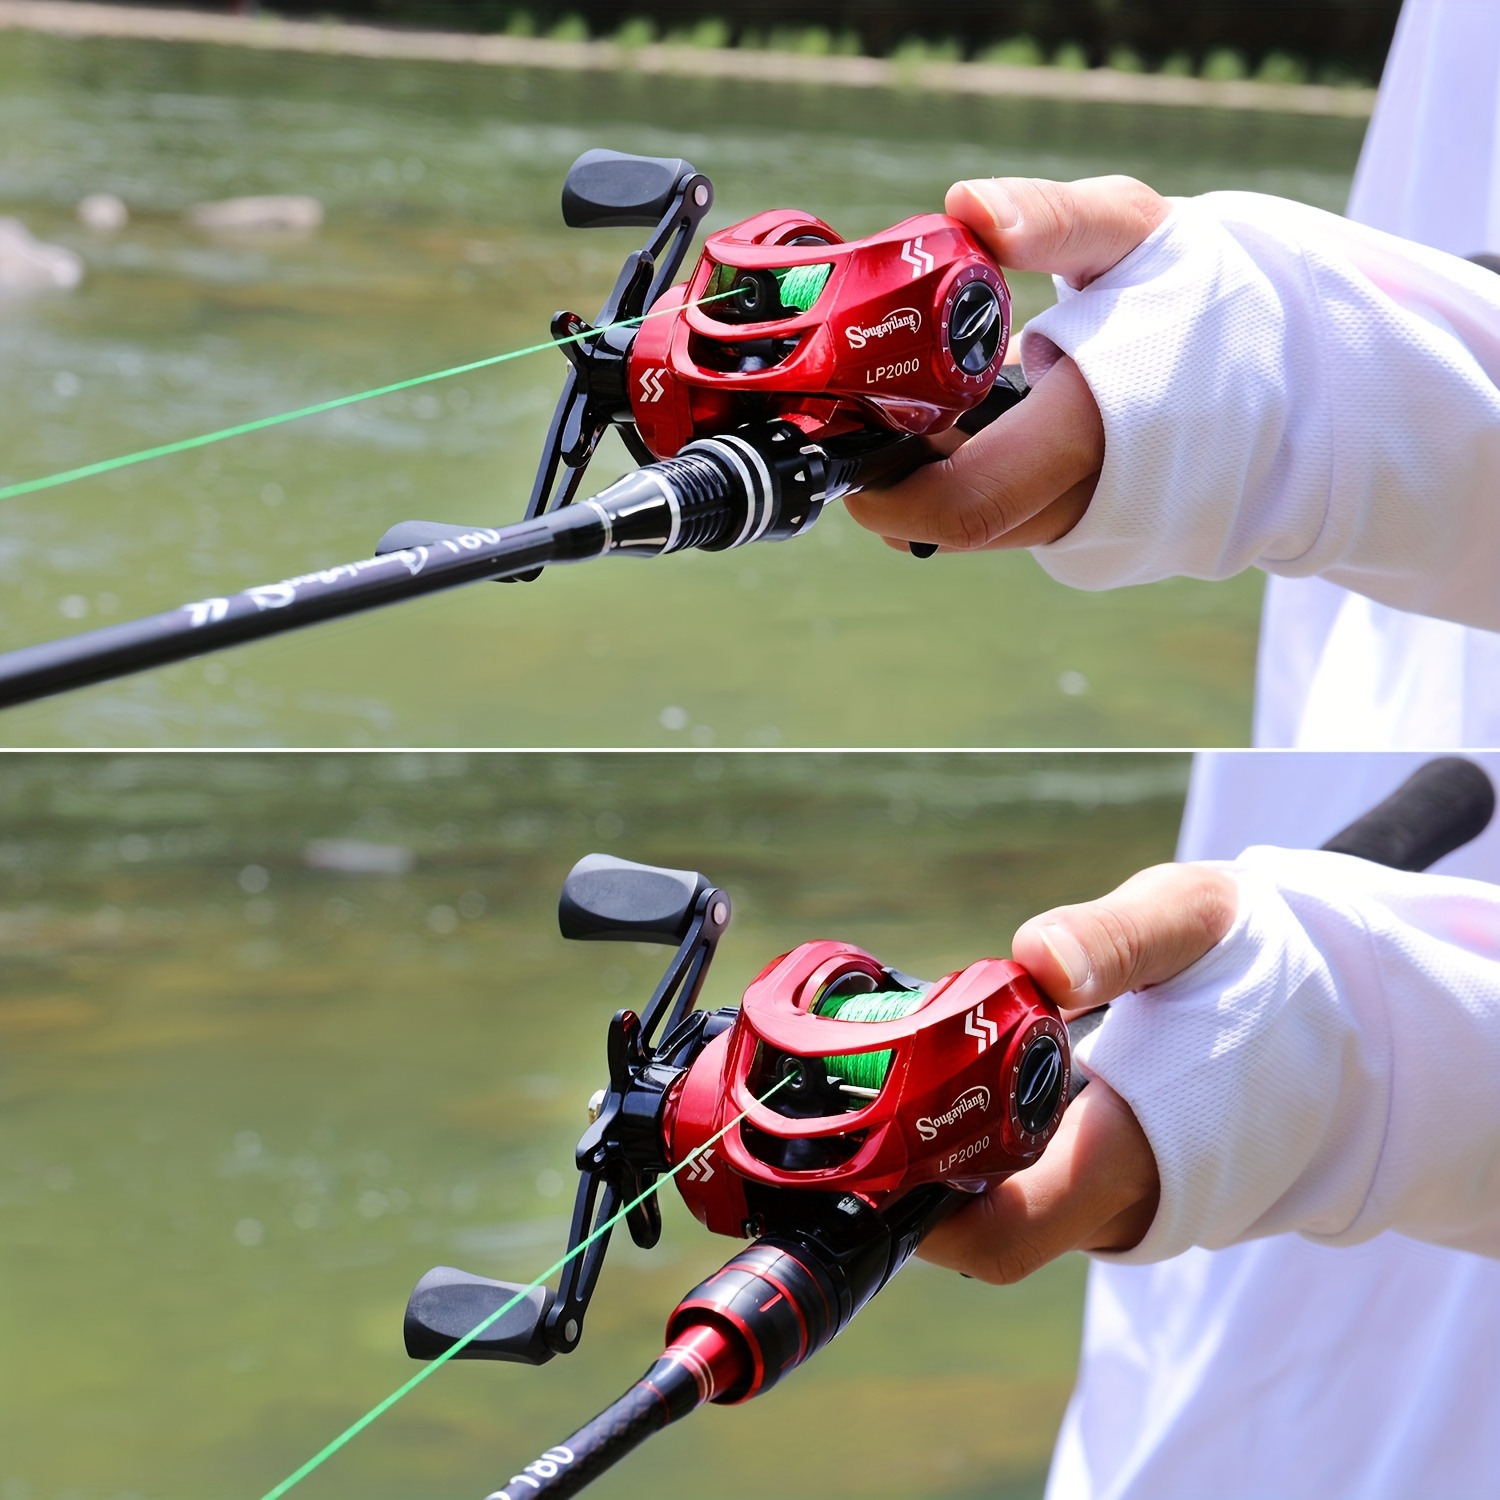 Sougayilang Fishing Rod Combos - Perfect for Anglers